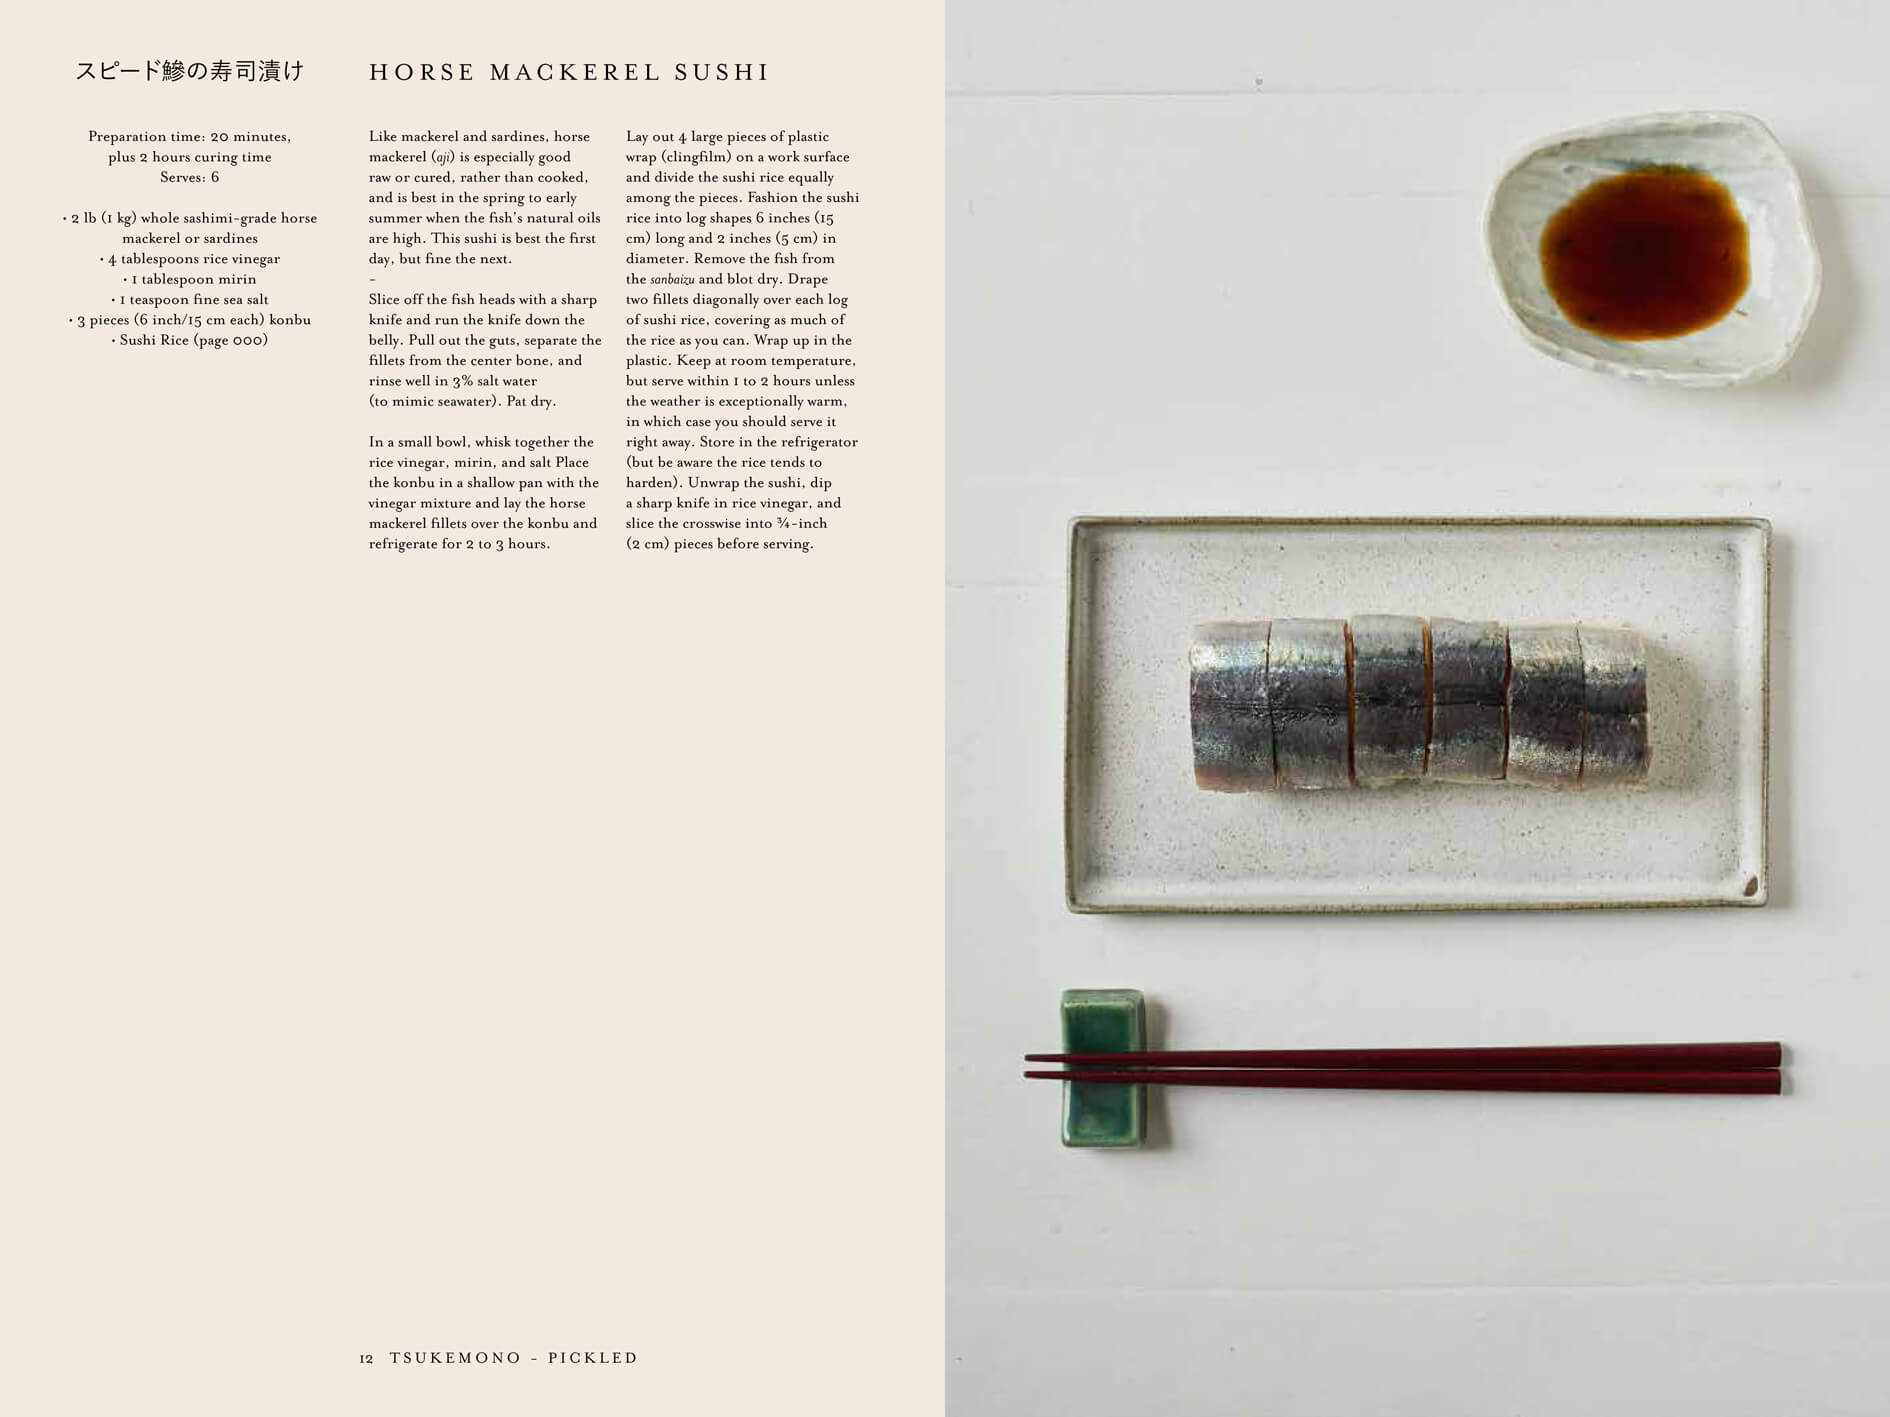 Japan: The Cookbook | by Nancy Singleton Hachisu - Lifestory - Bookspeed